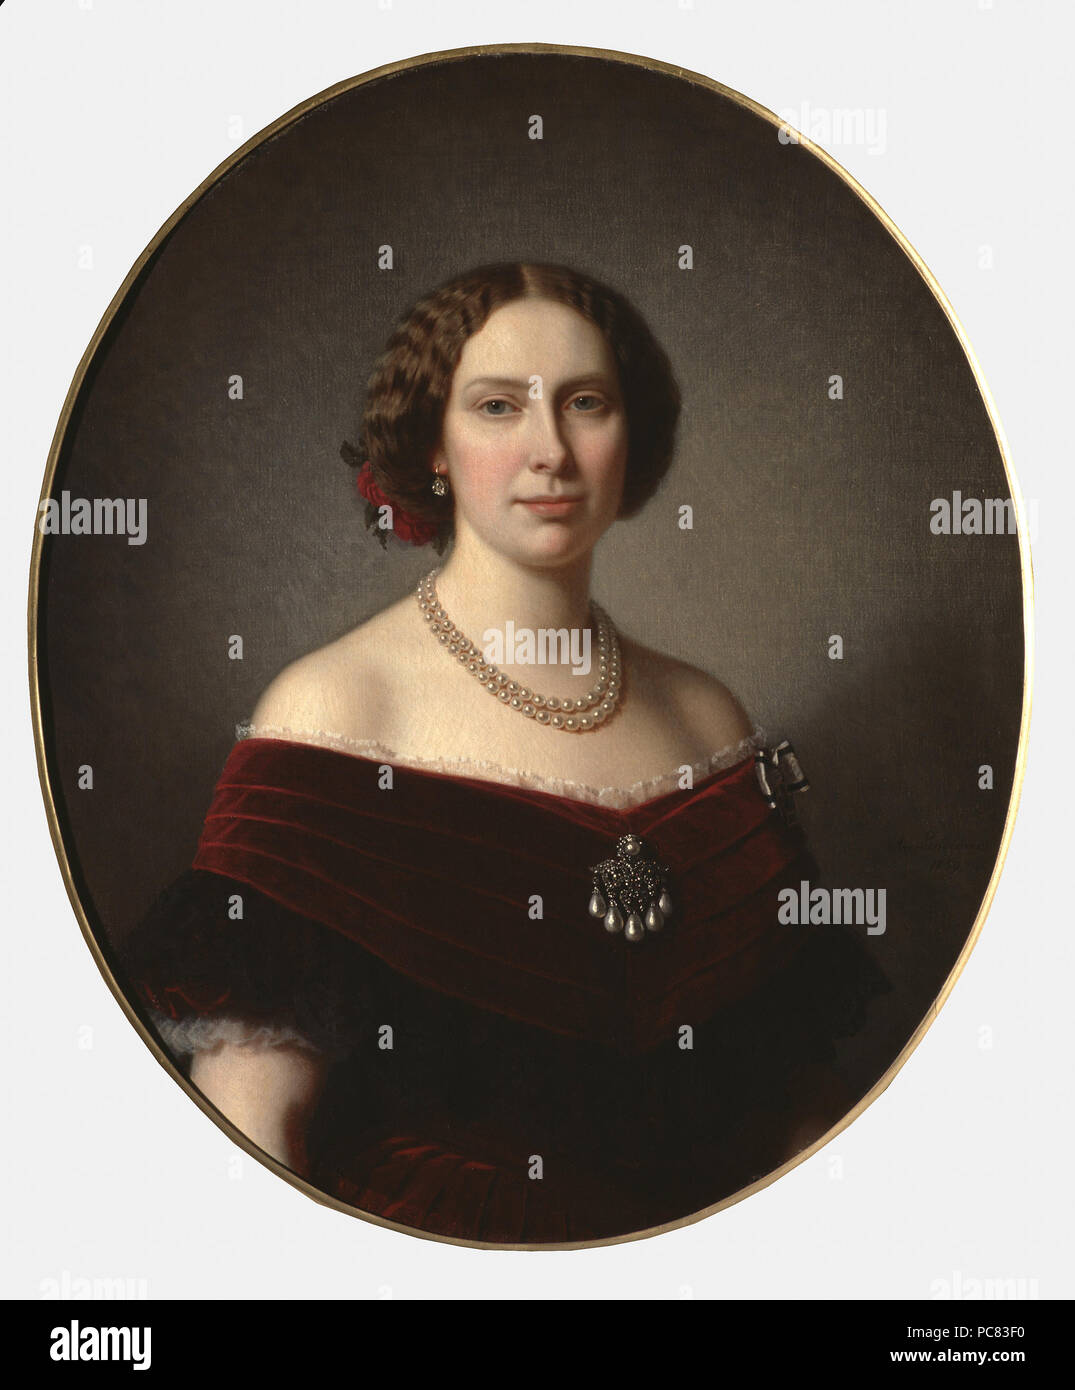 58 Lovisa, 1828-1871, drottning av Sverige (Amalia Lindegren) - Nationalmuseum - 18191 Stock Photo